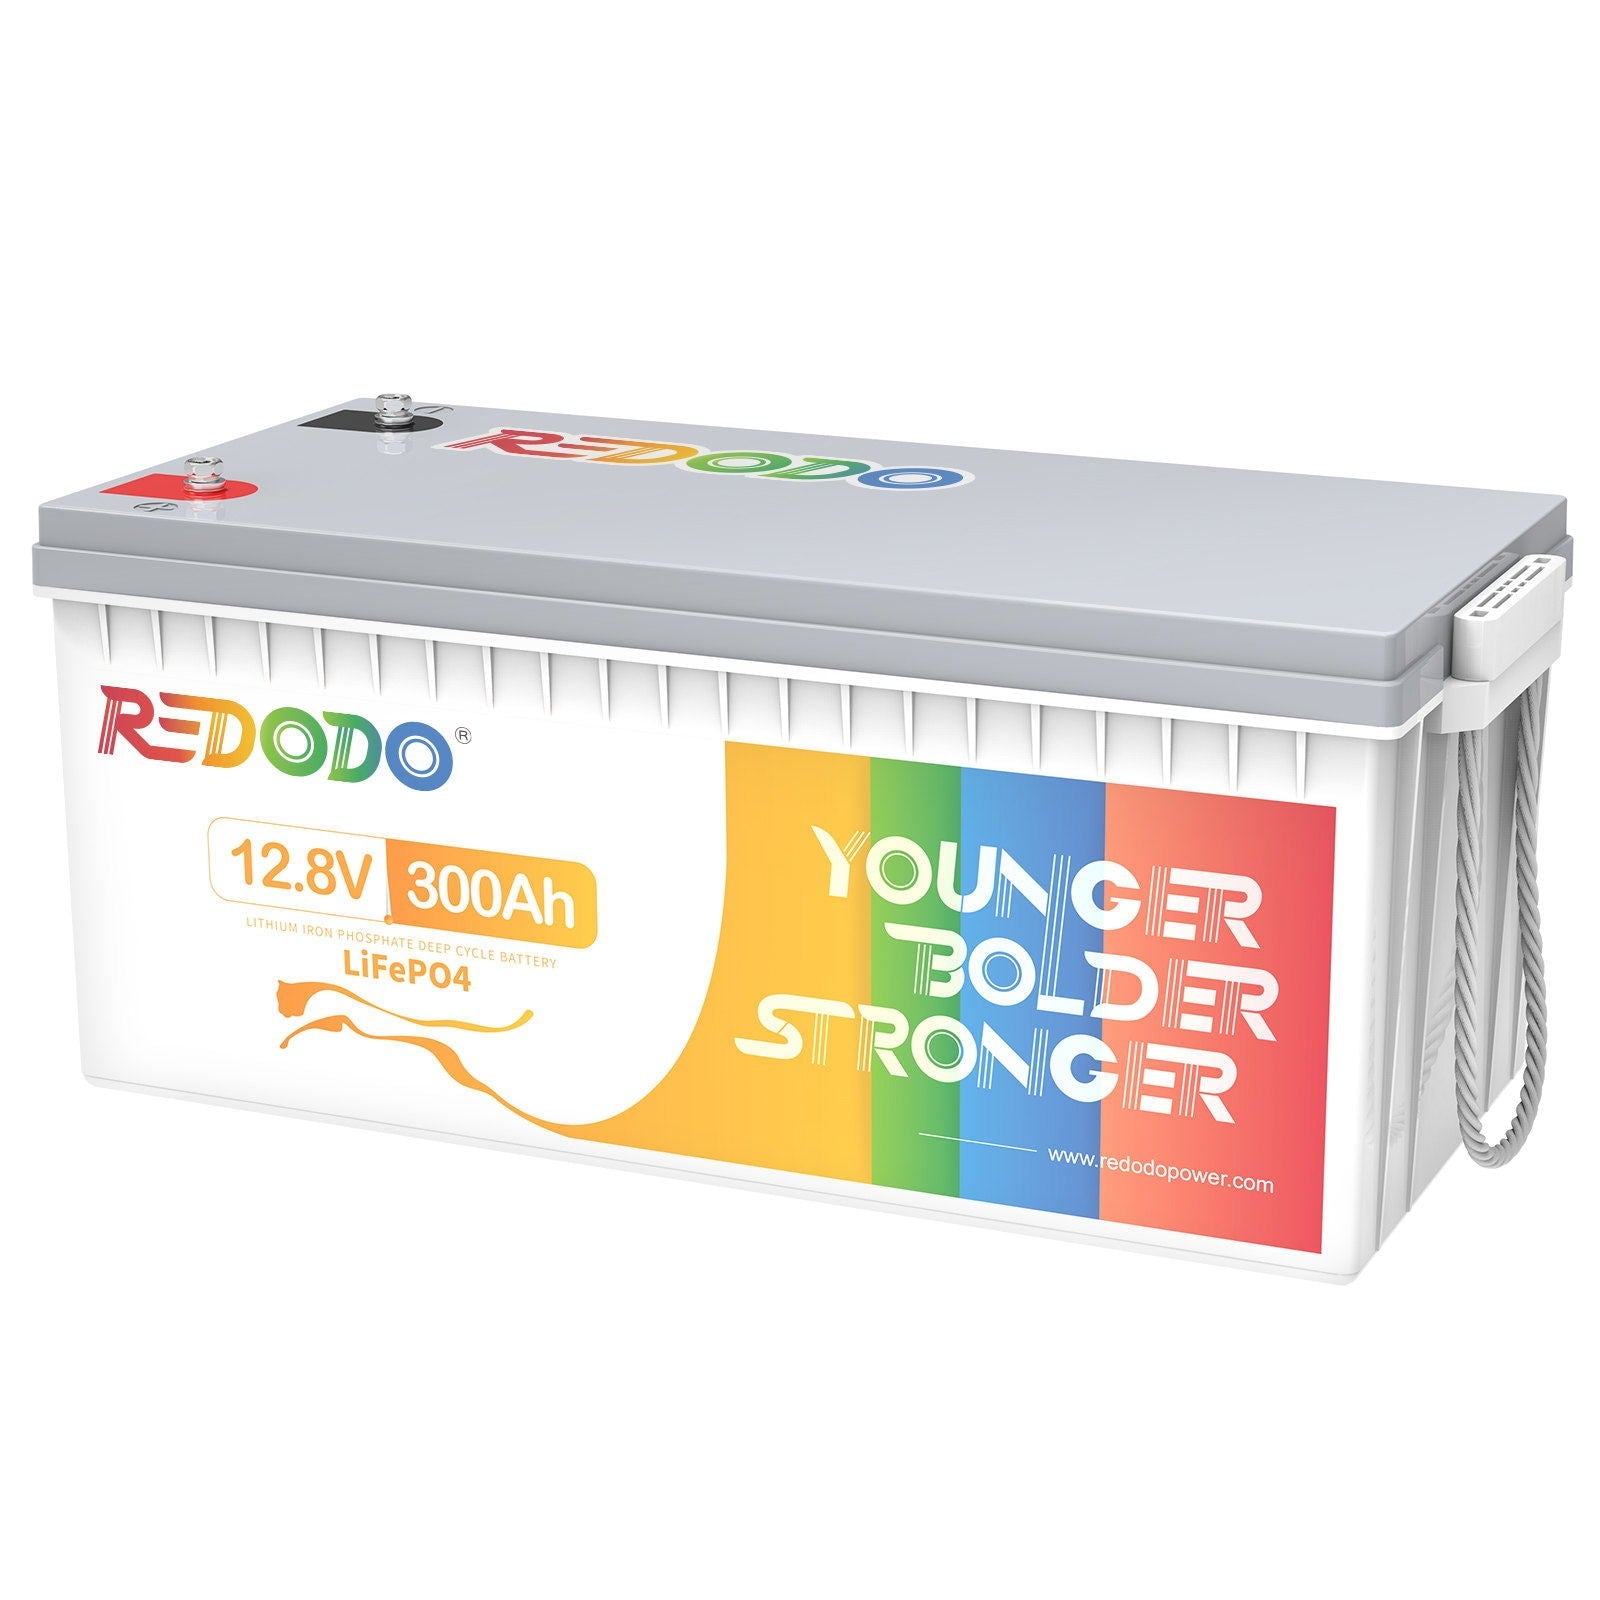 【Like New】Redodo 12V 300Ah LiFePO4 Battery | 3.84kWh & 2.56kW Redodo